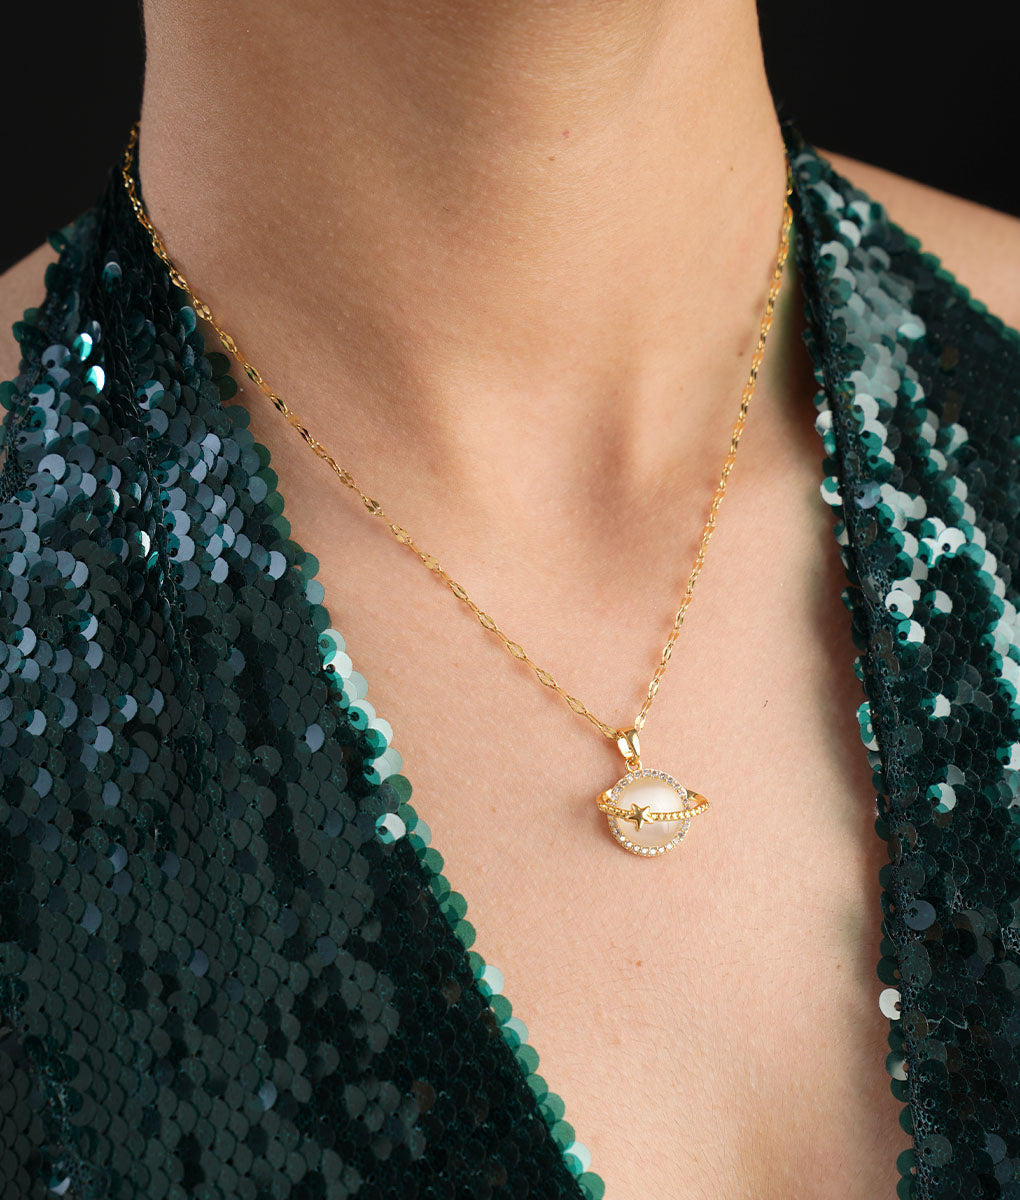 The Opal Orbit Necklace